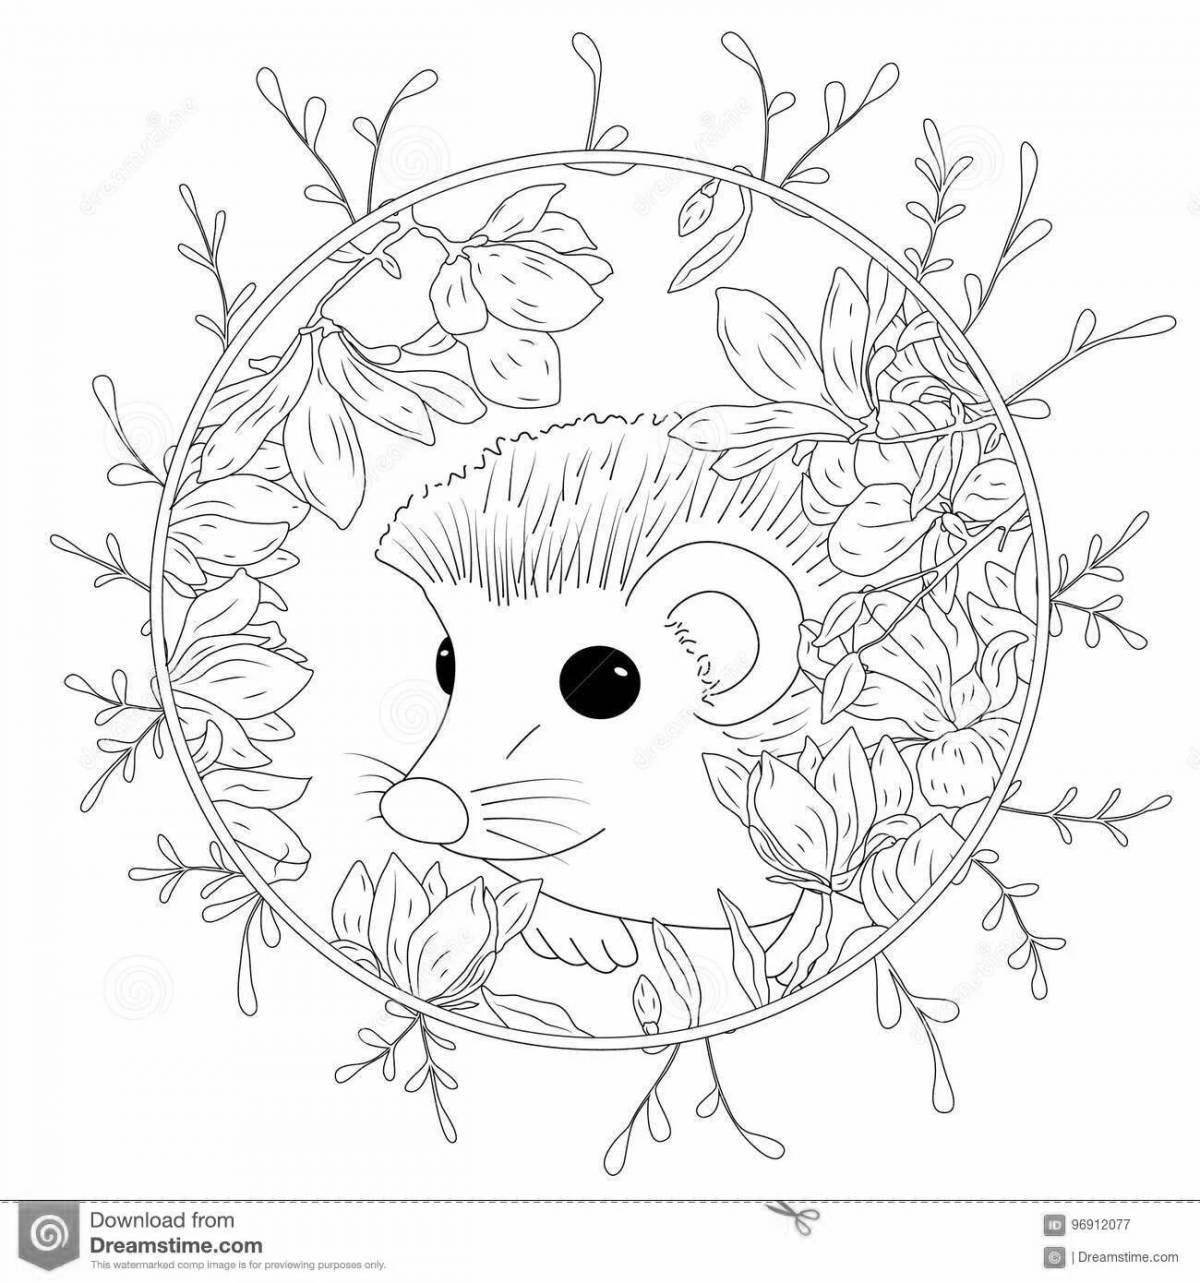 Adorable anti-stress hedgehog coloring book